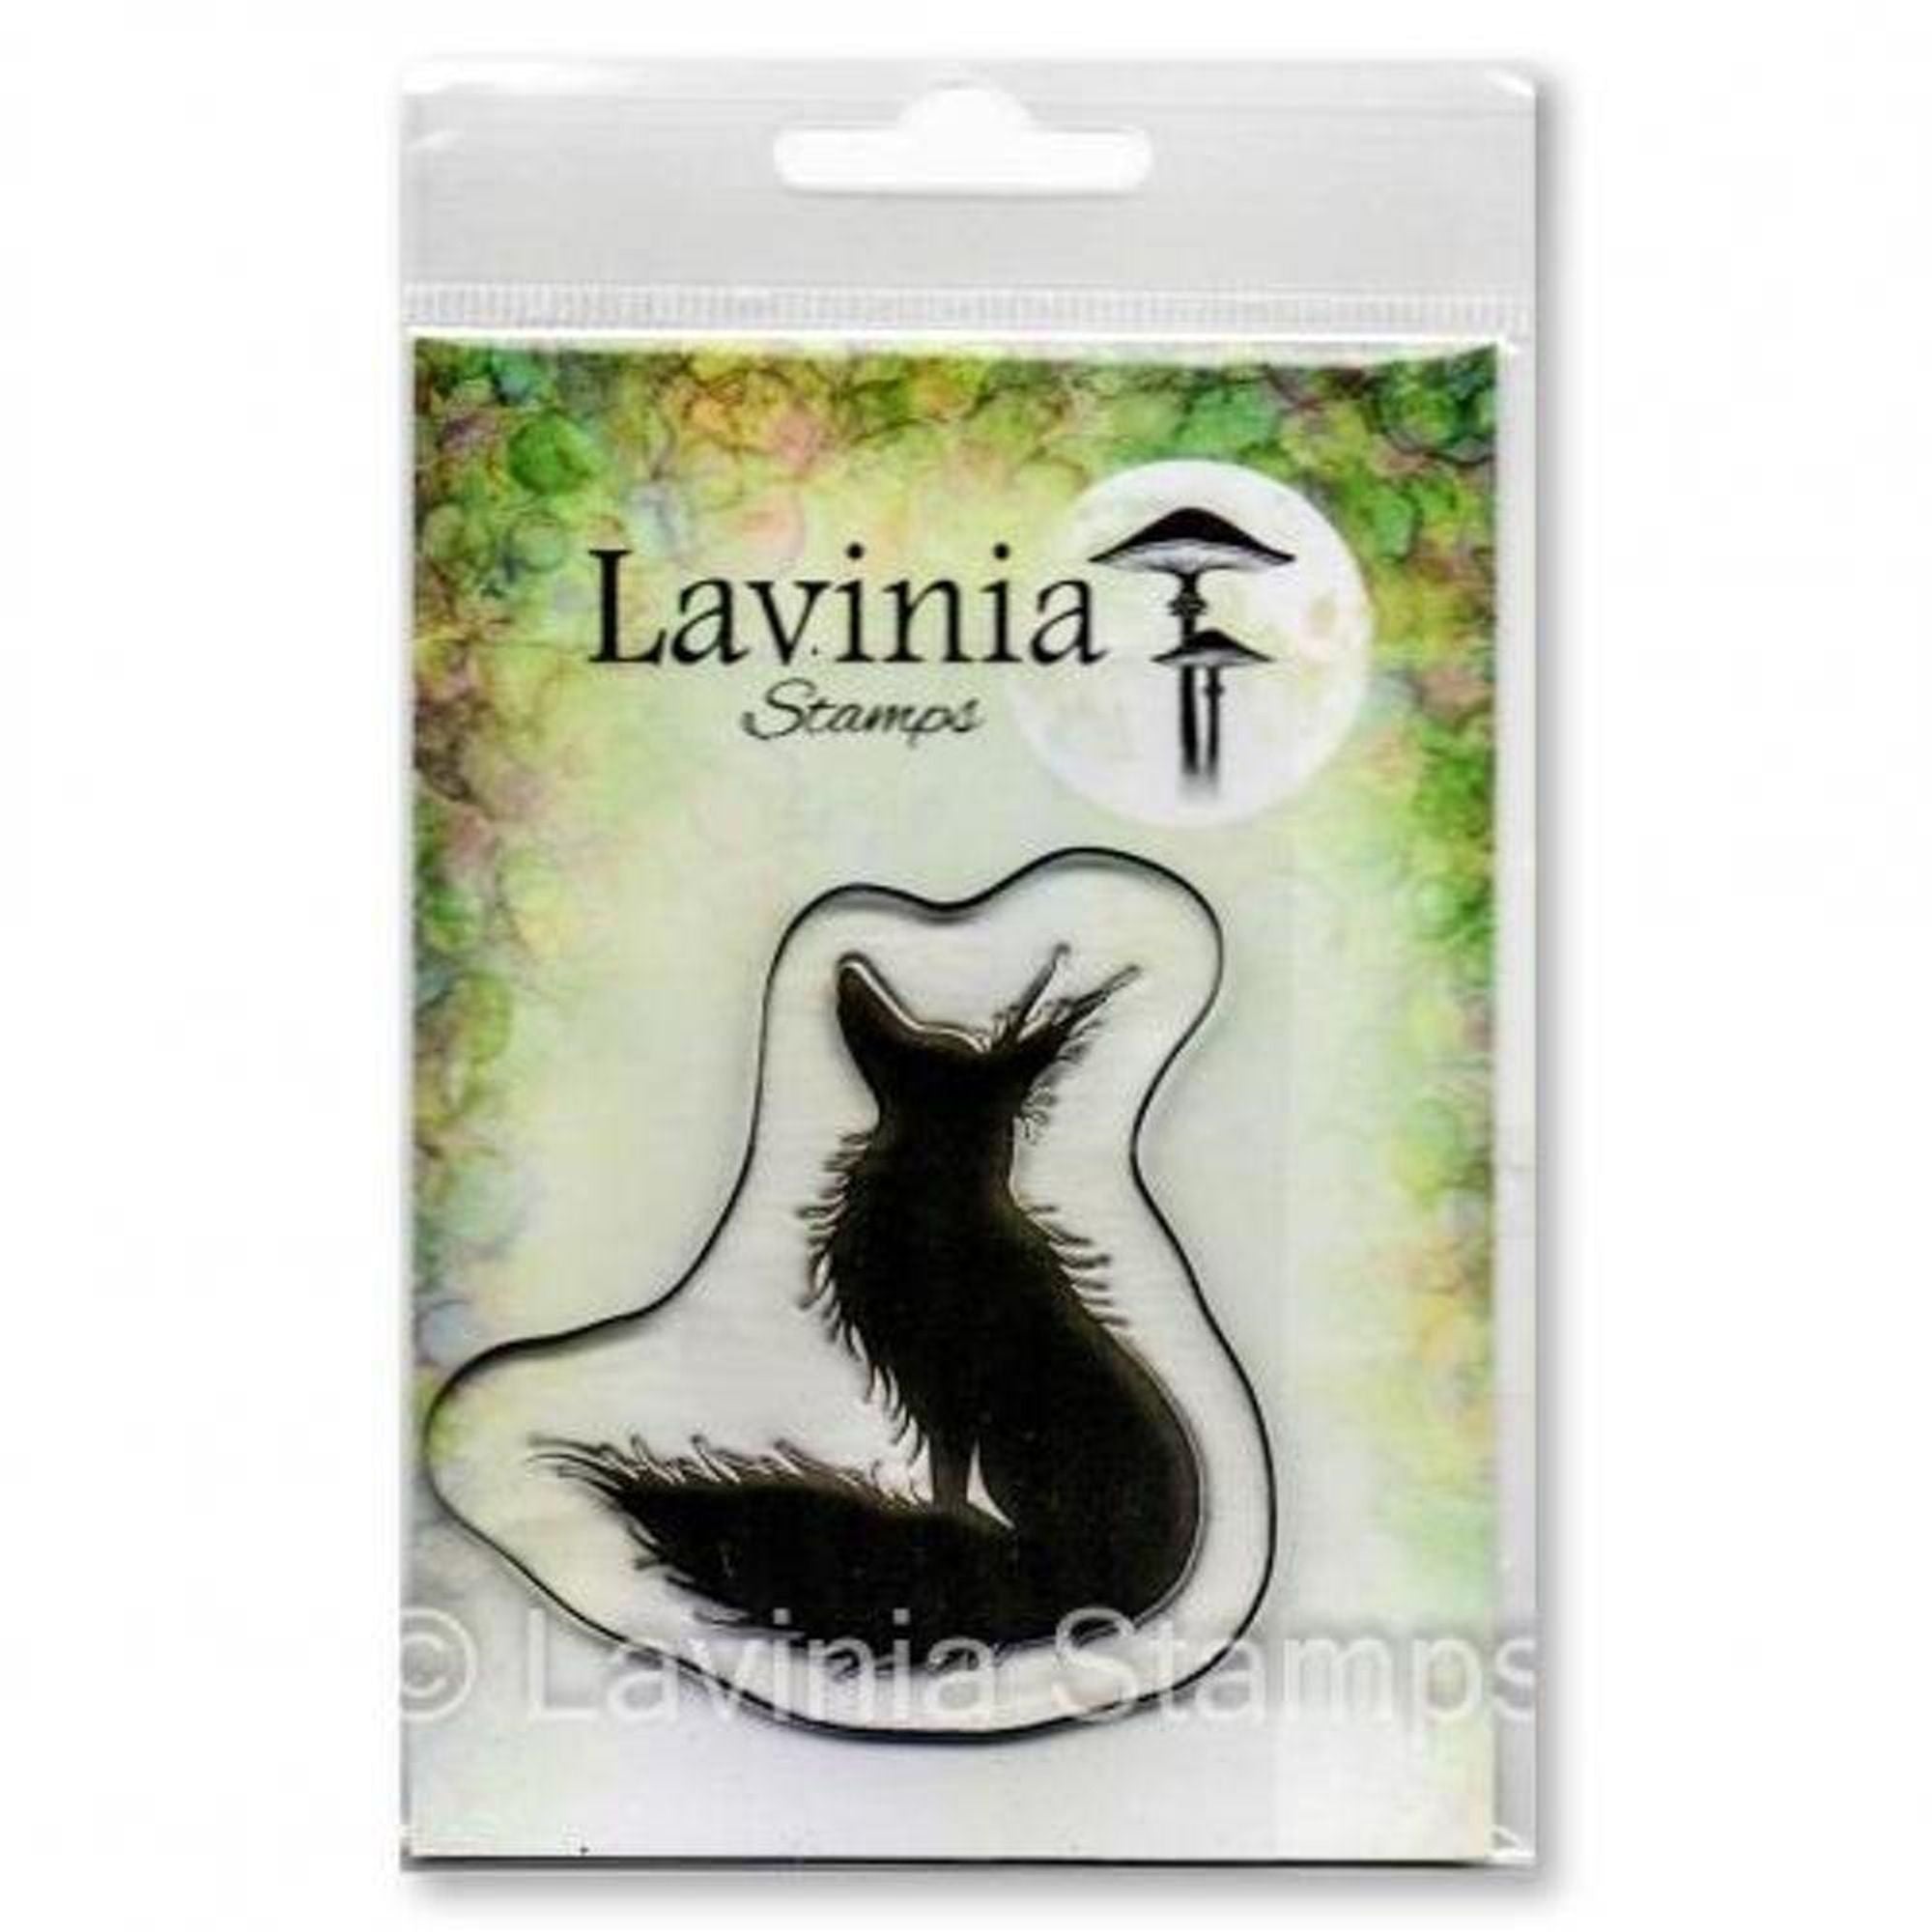 Lavinia Stamps Rufus